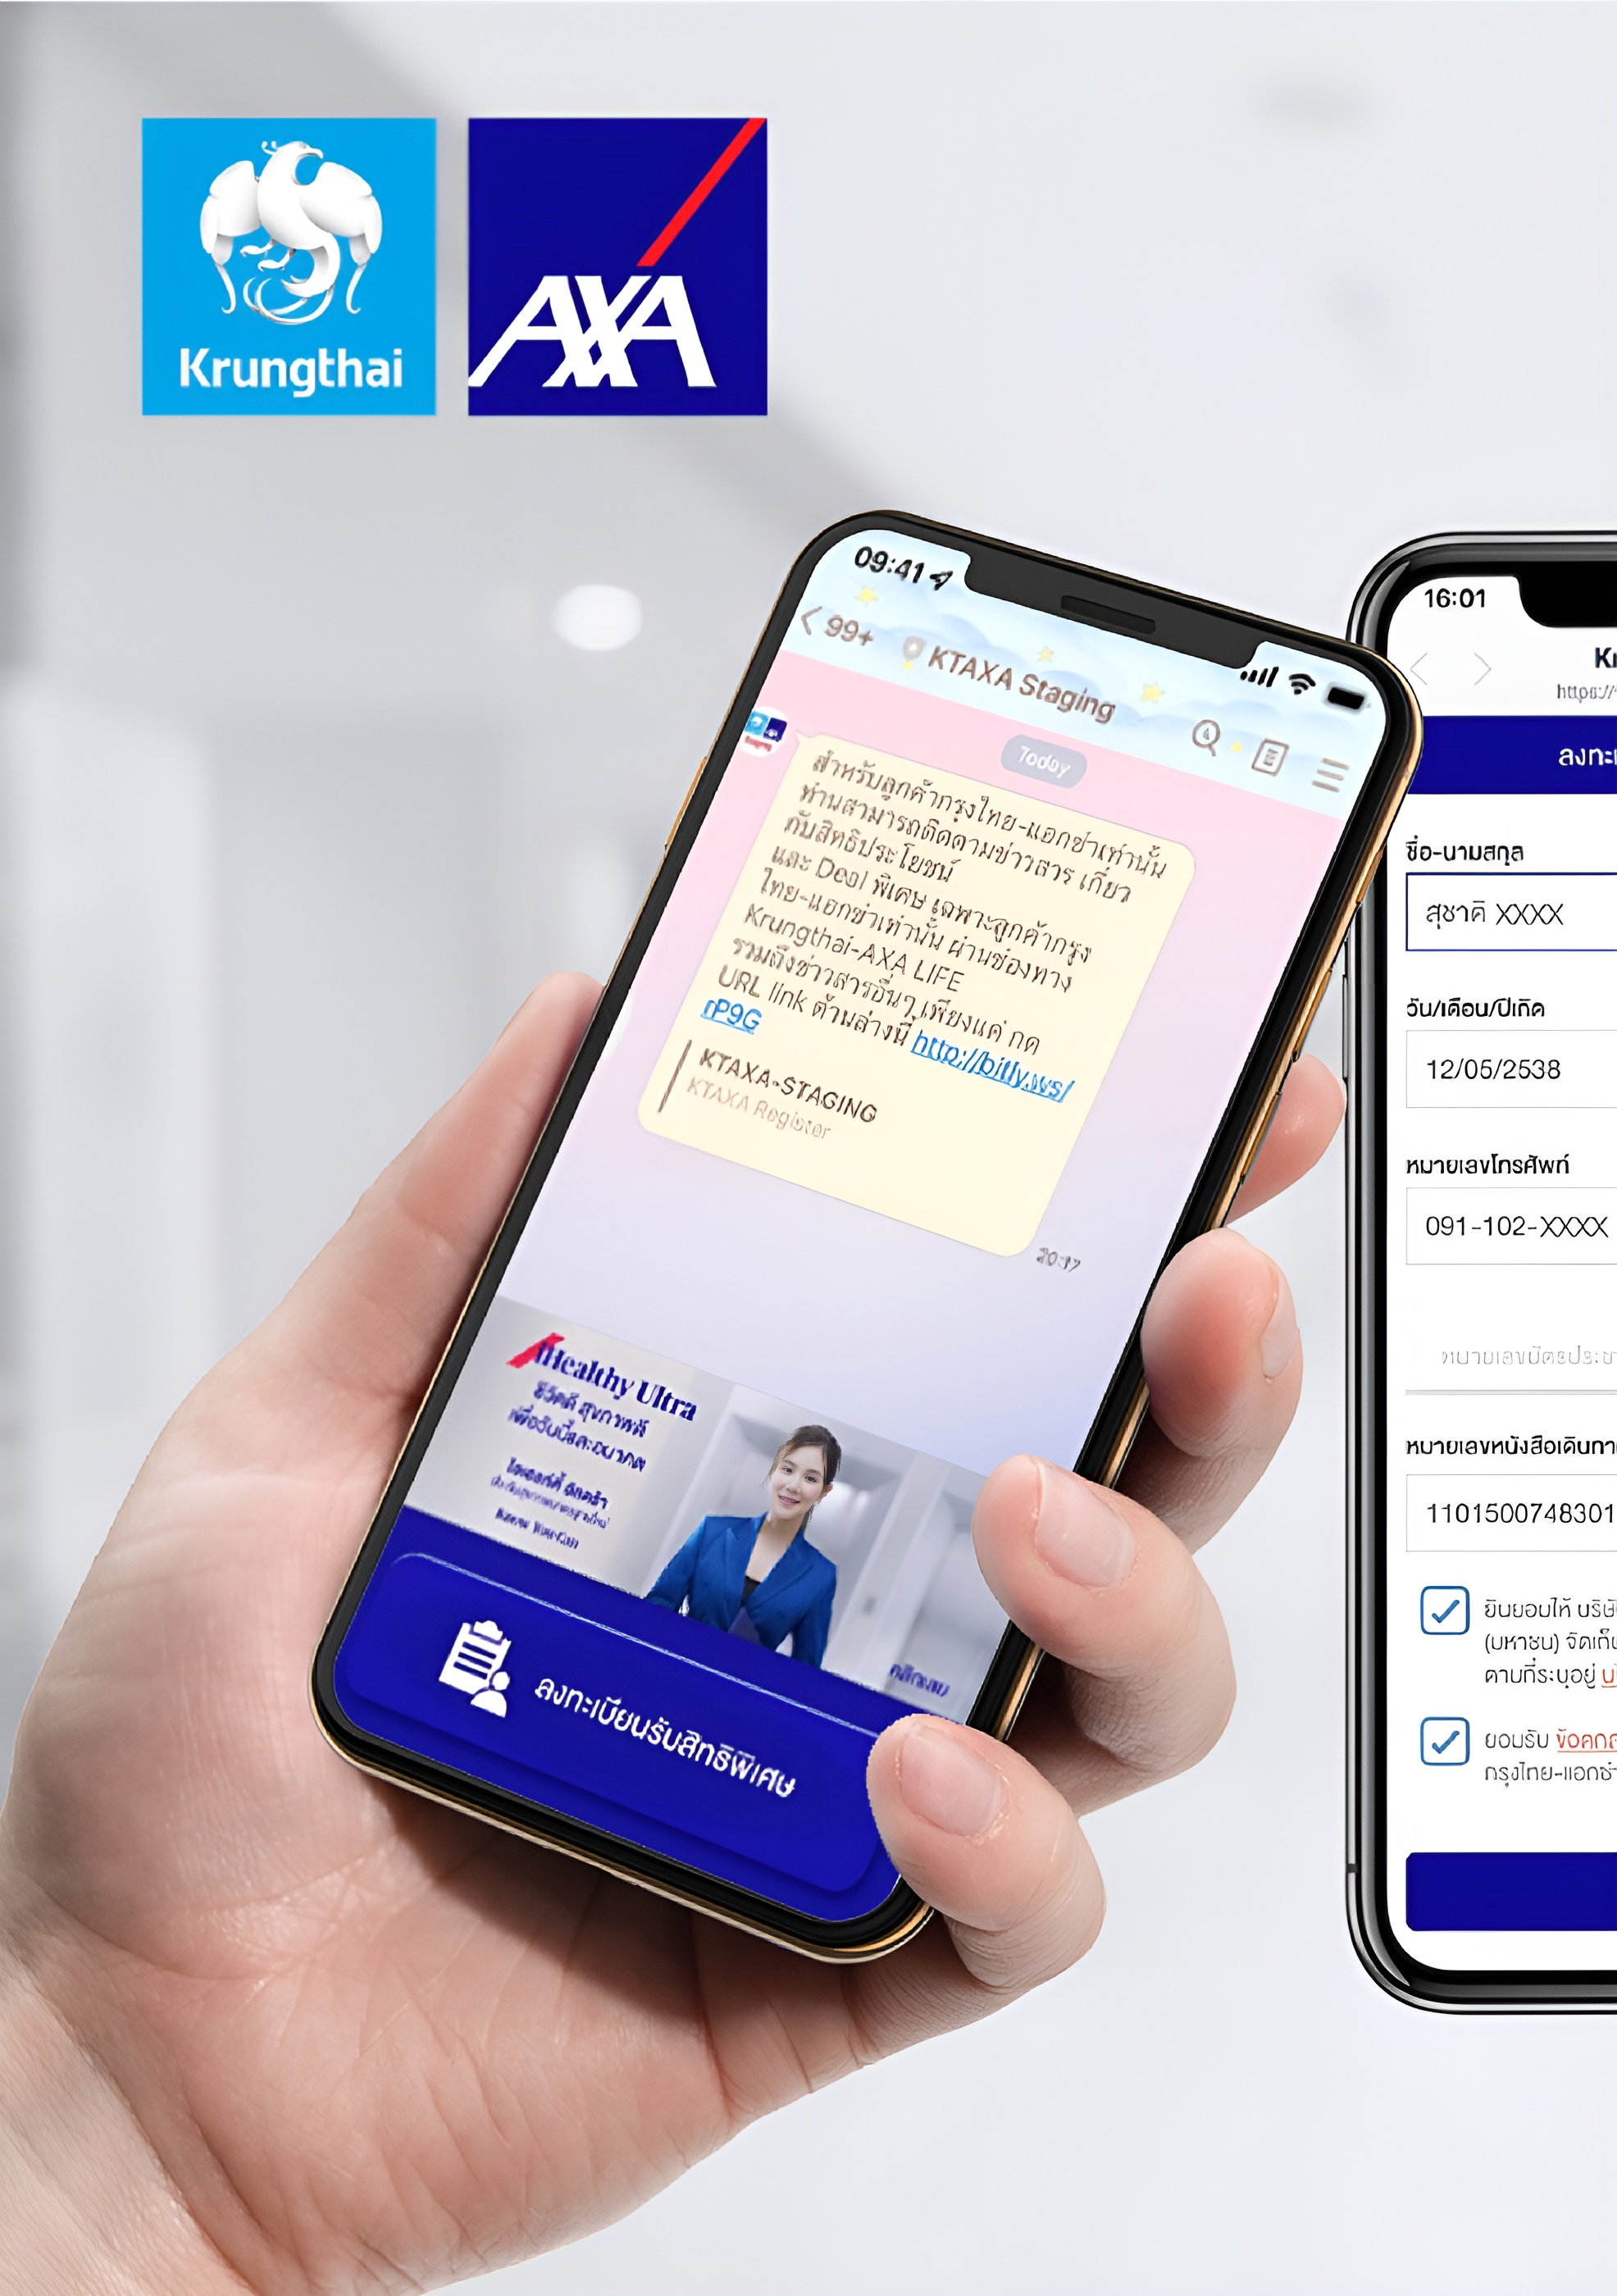 Krungthai-AXA Life: LINE CRM Platform